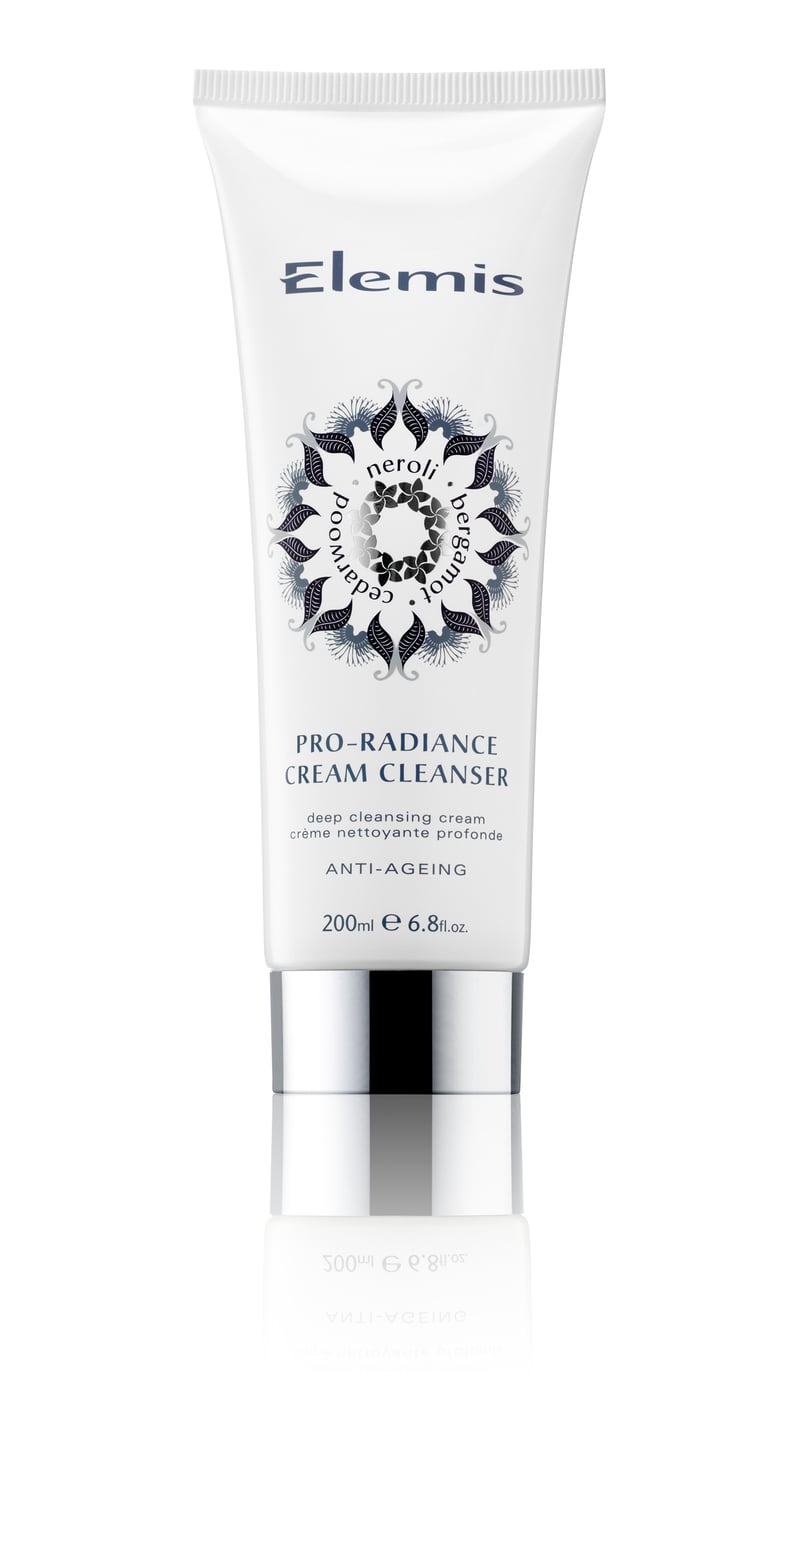 Elemis Special Edition Pro-Radiance Cream Cleanser